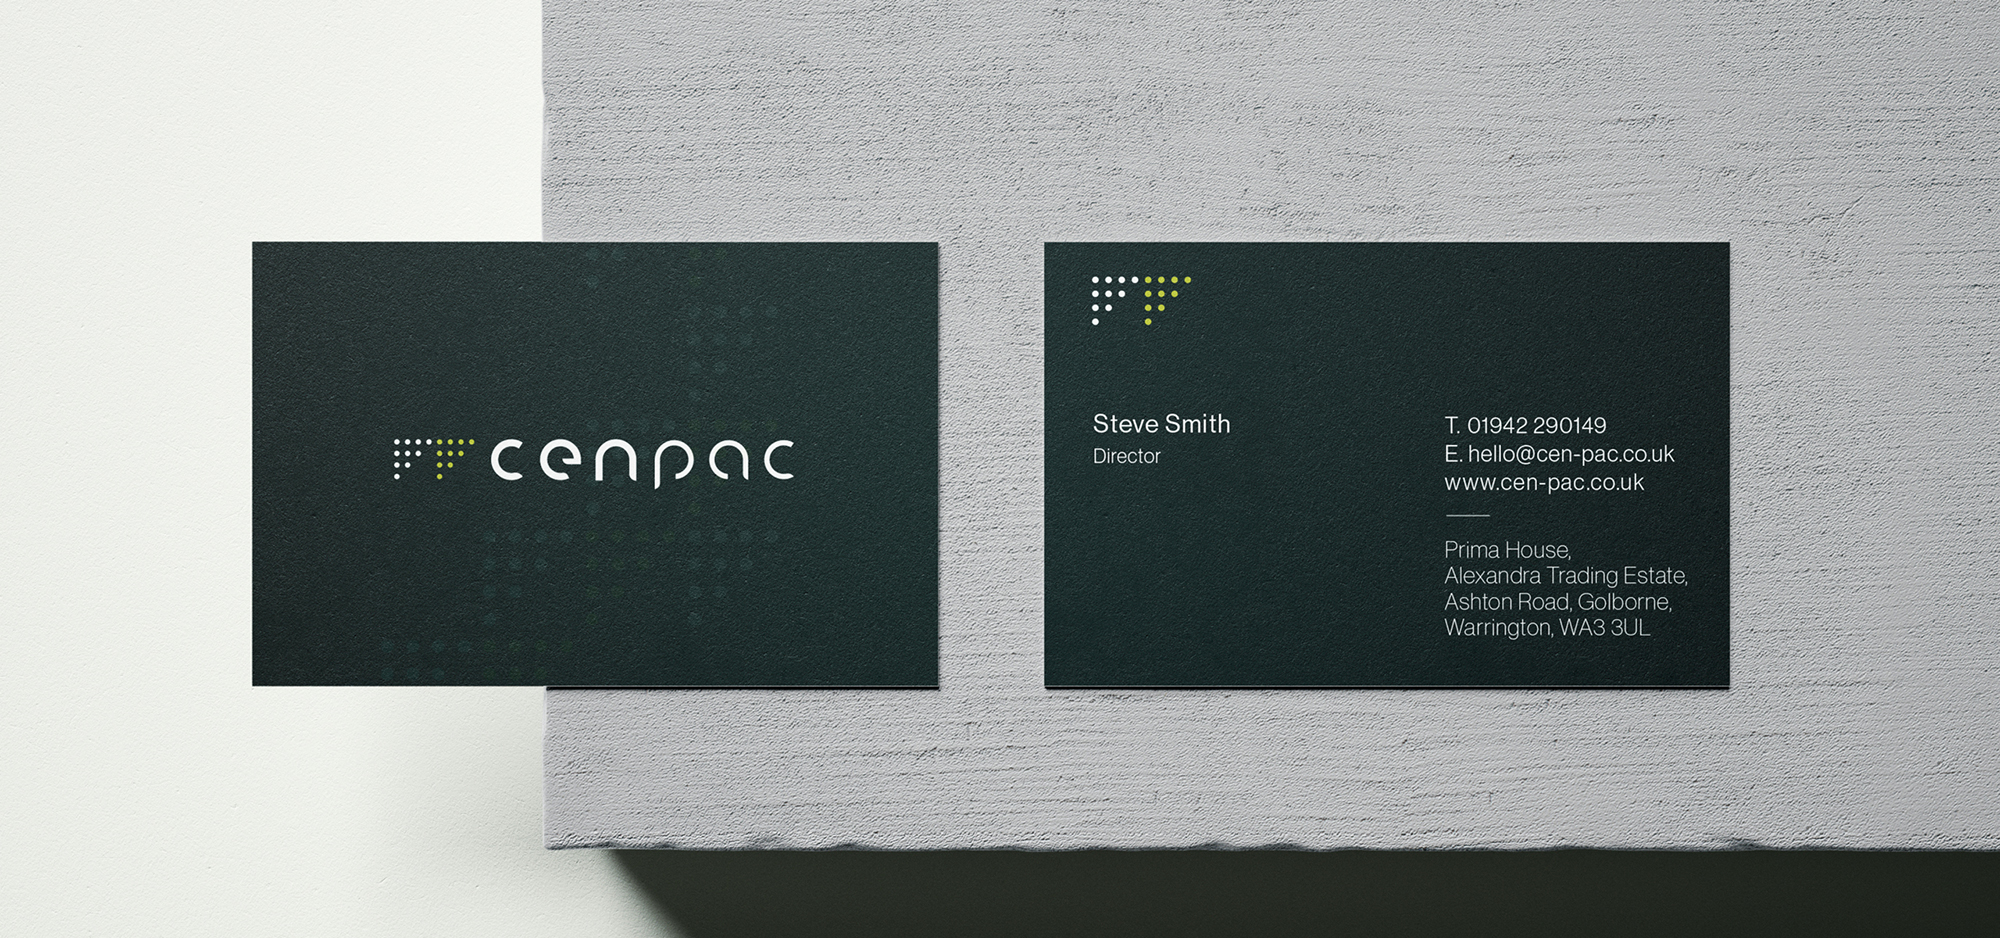 Cenpac print business card design